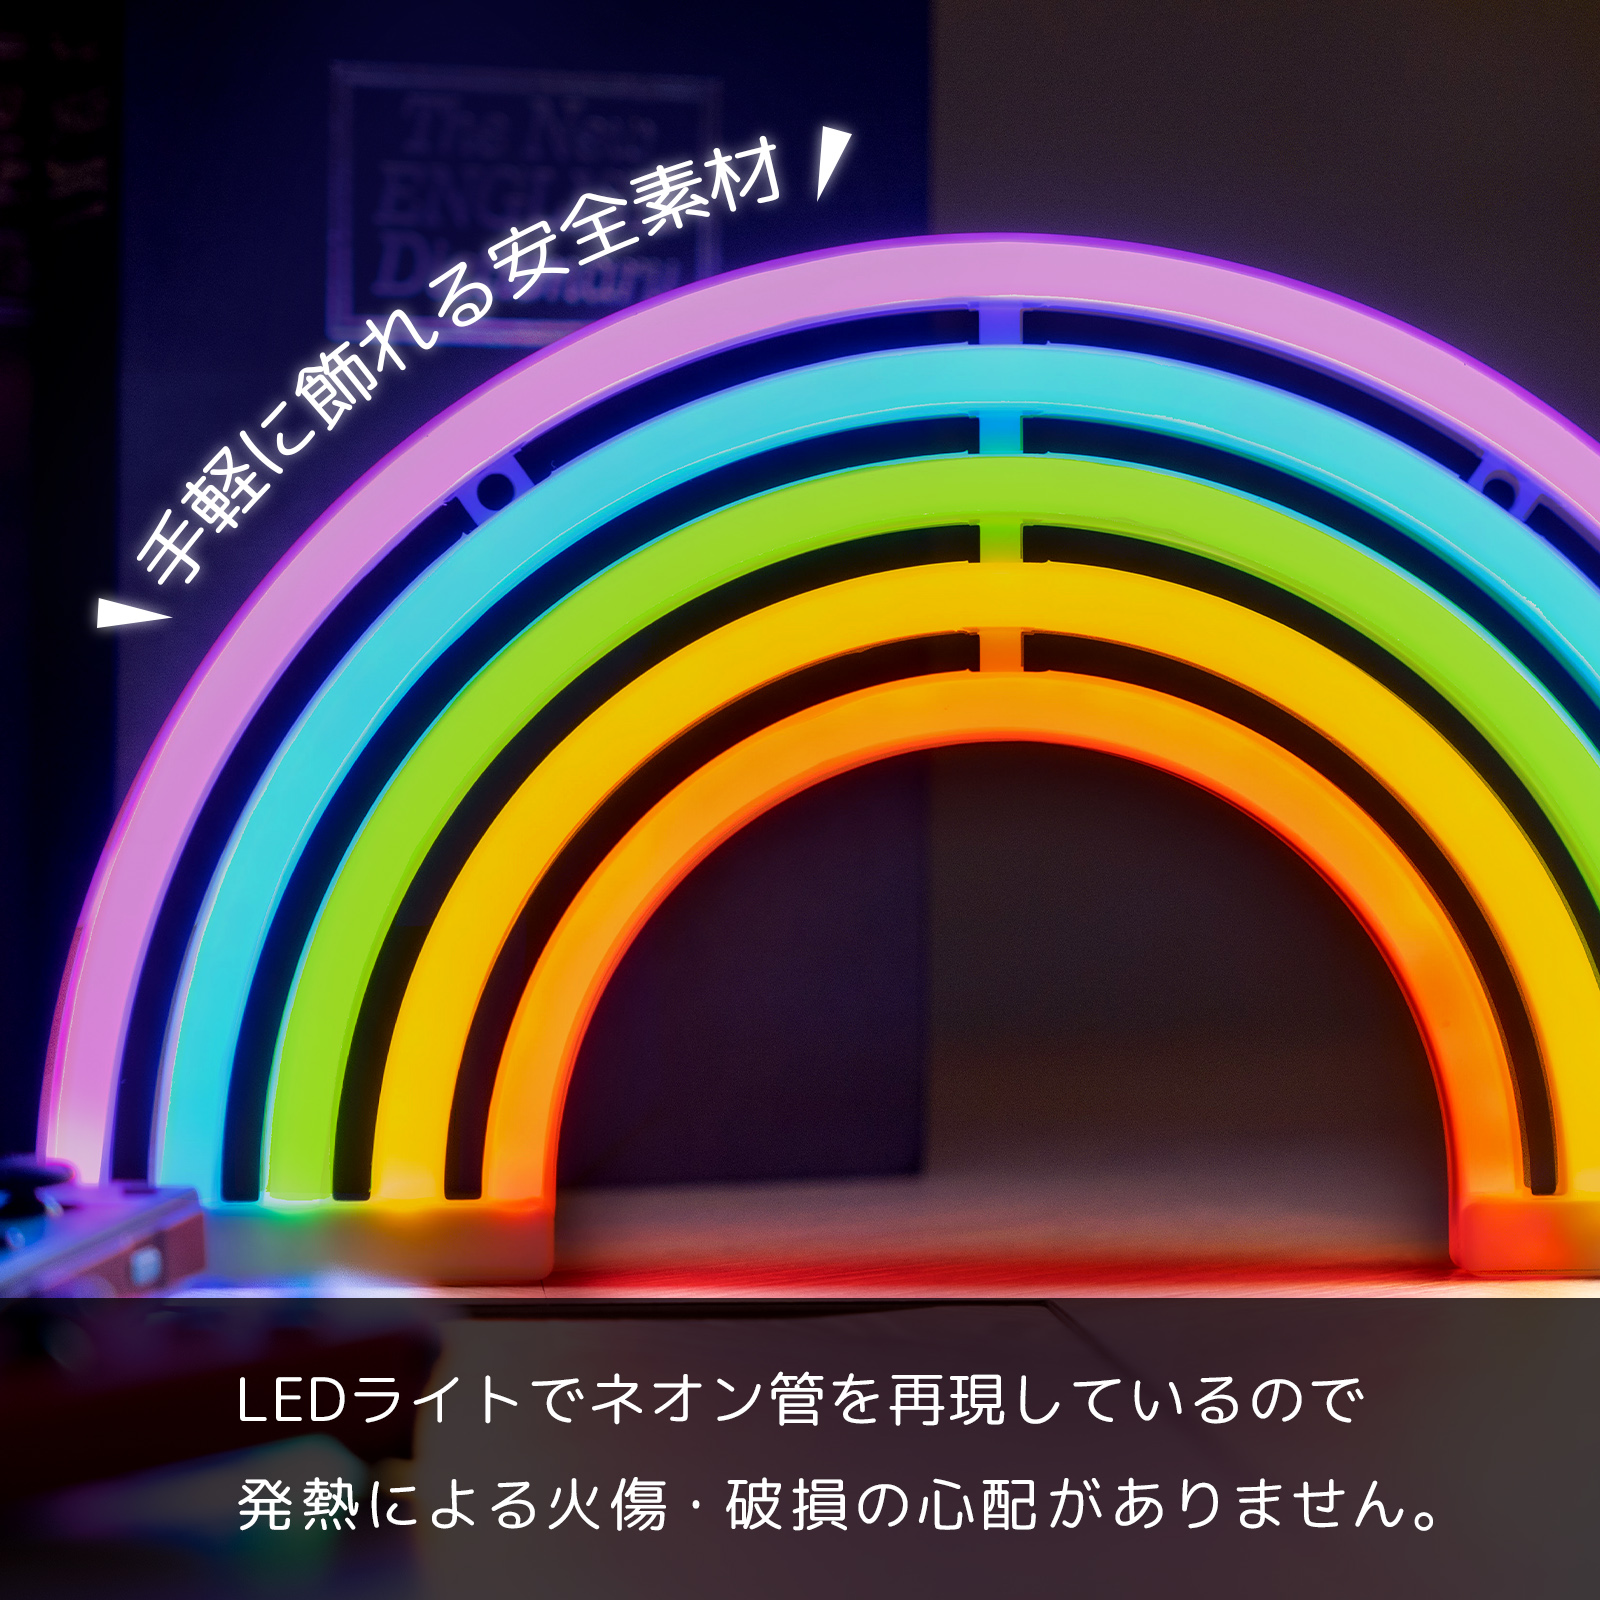 RAINBOW LED 虹 レインボー ネオン ライト ネオンサイン ネオン管 ネオンチューブ インテリア USB TRD RLOGI